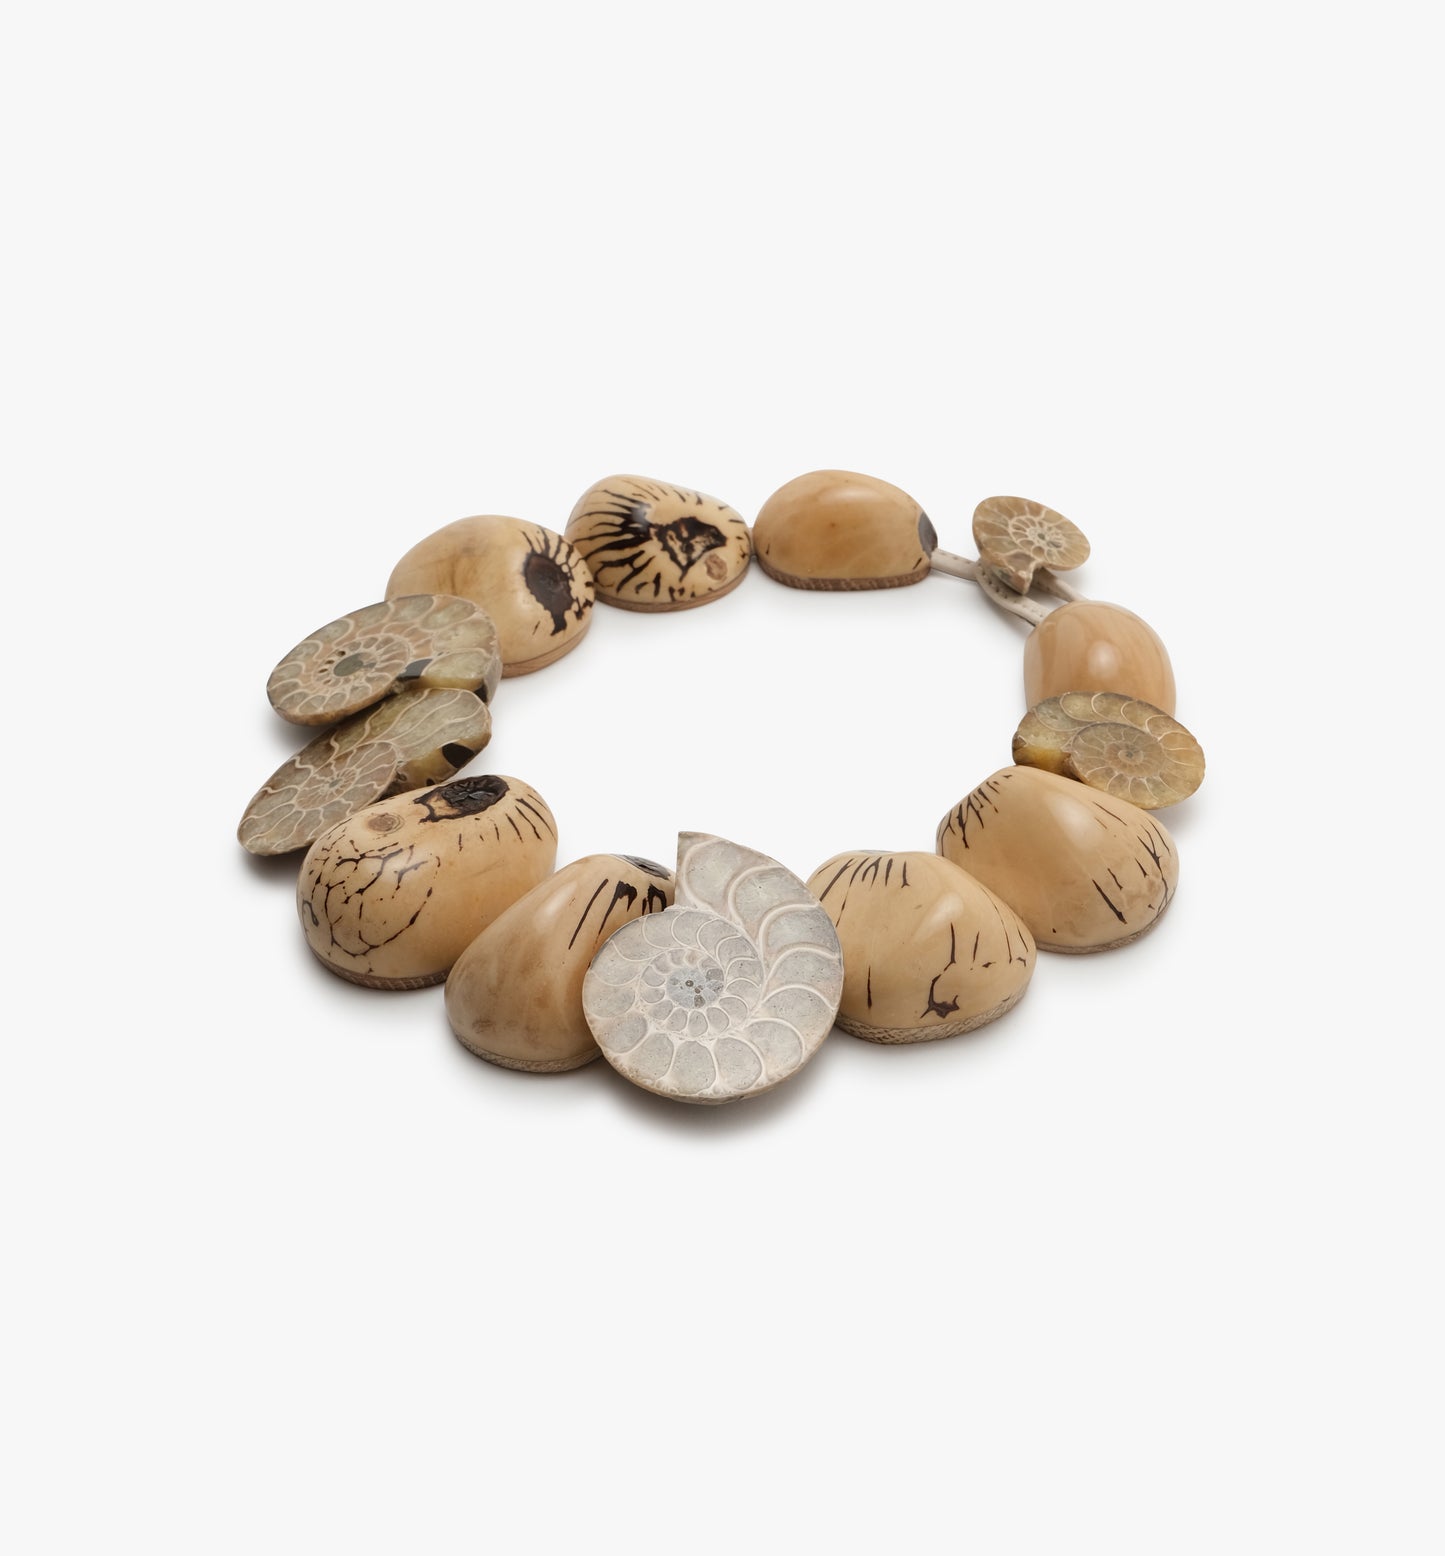 Necklace: ammonite, tagua nut, leather